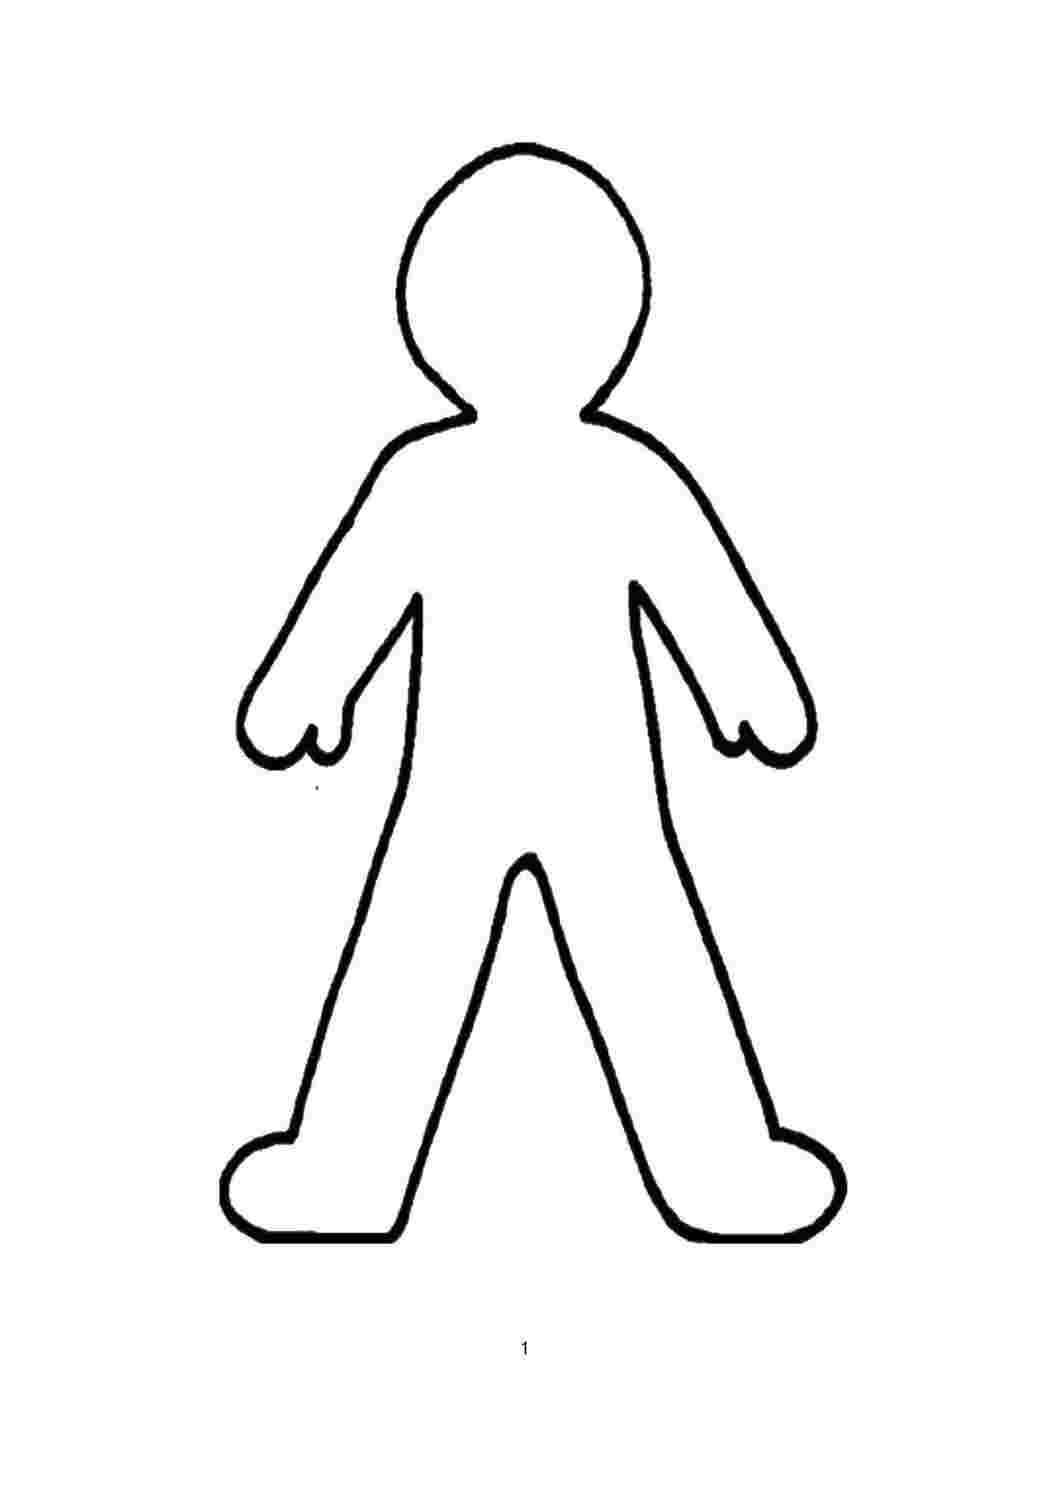 Раскраски Контур бумажного человечка Контур девочки контур, человек, руки, ноги